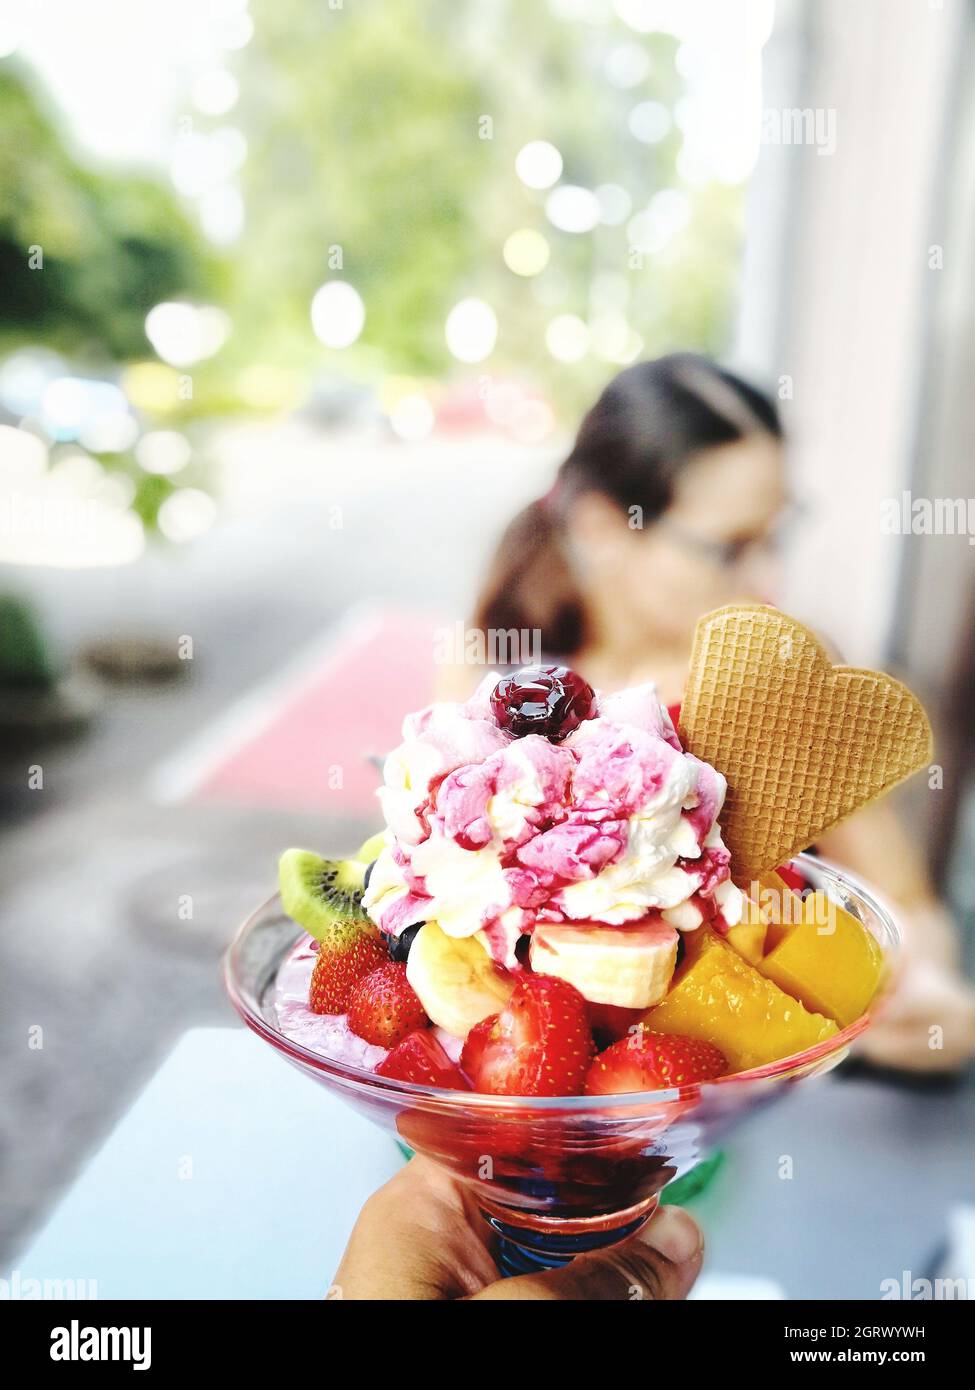 Cropped Image Of Person Holding Ice Cream Sundae Outdoors Stock Photo